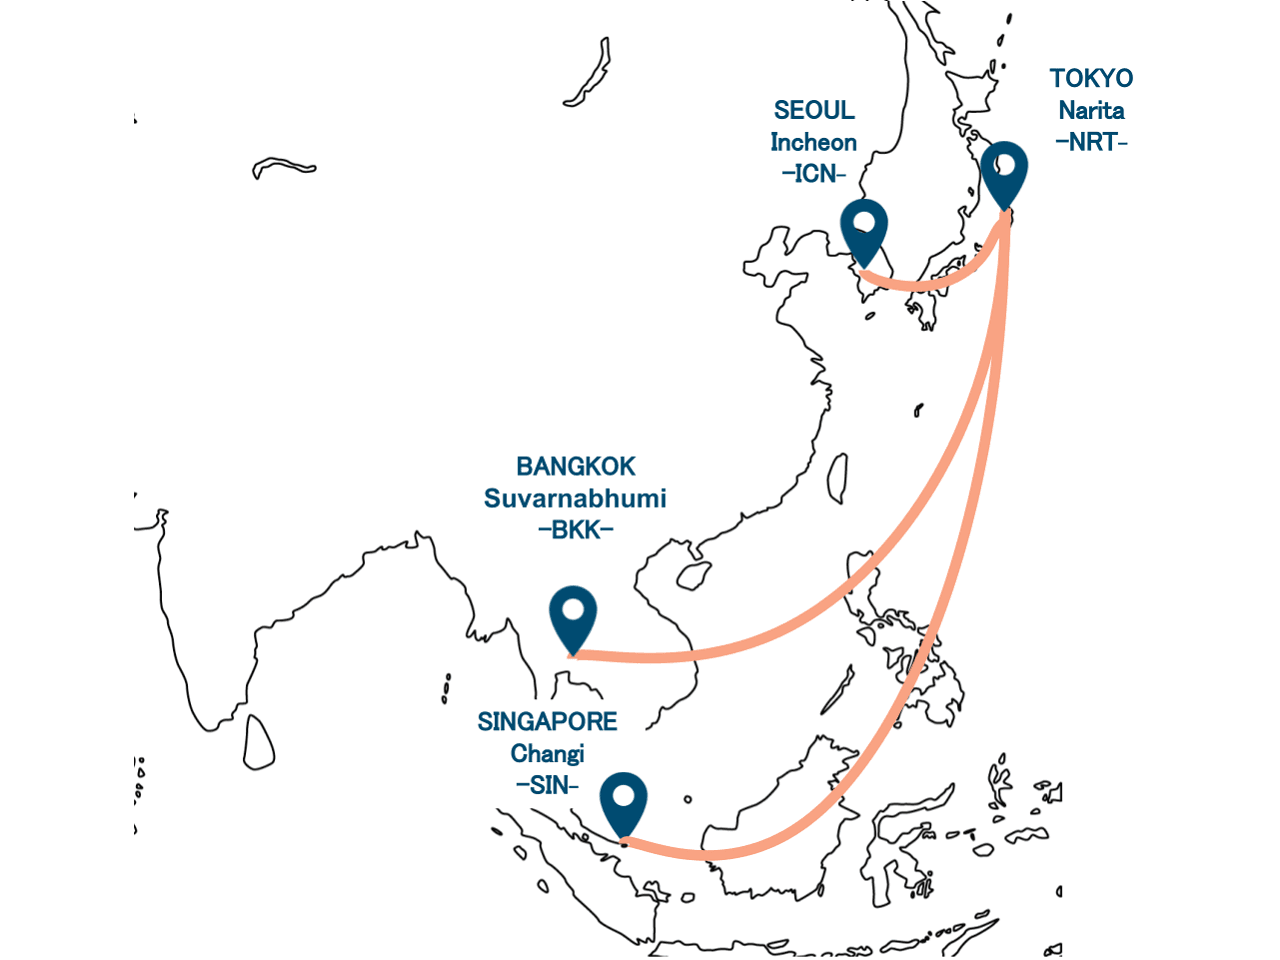 "Photograph of Air Japan’s flight routes. The lines represent routes to Bangkok-Suvarnabhumi International Airport (BKK), Seoul-Inchon International Airport (ICN) based out of Tokyo-Narita International Airport (NRT)."